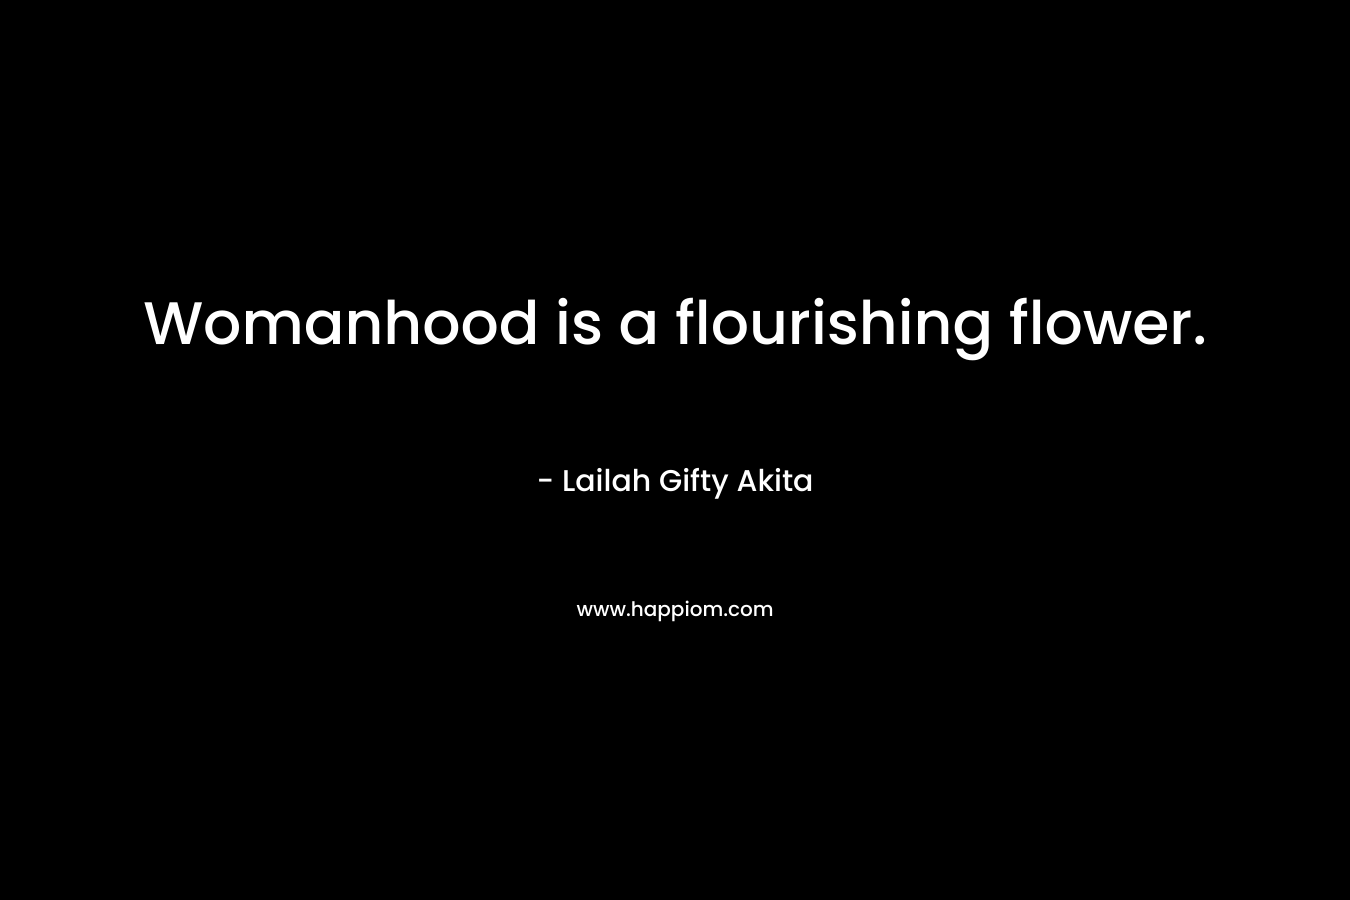 Womanhood is a flourishing flower. – Lailah Gifty Akita